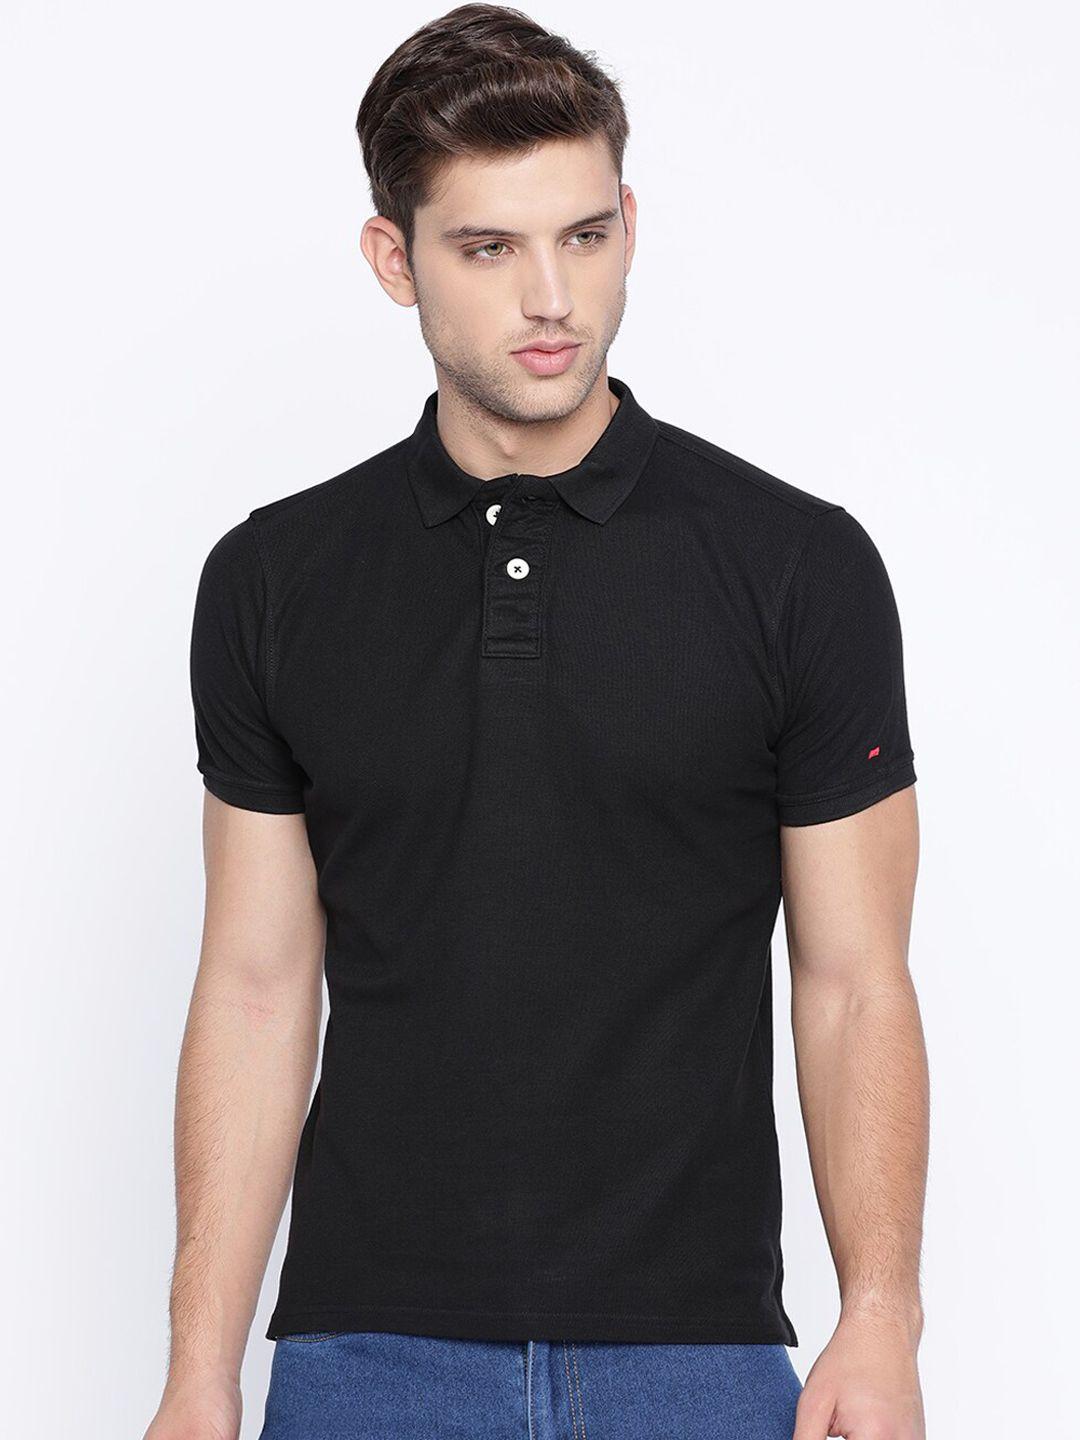 basics men black solid v-neck t-shirt